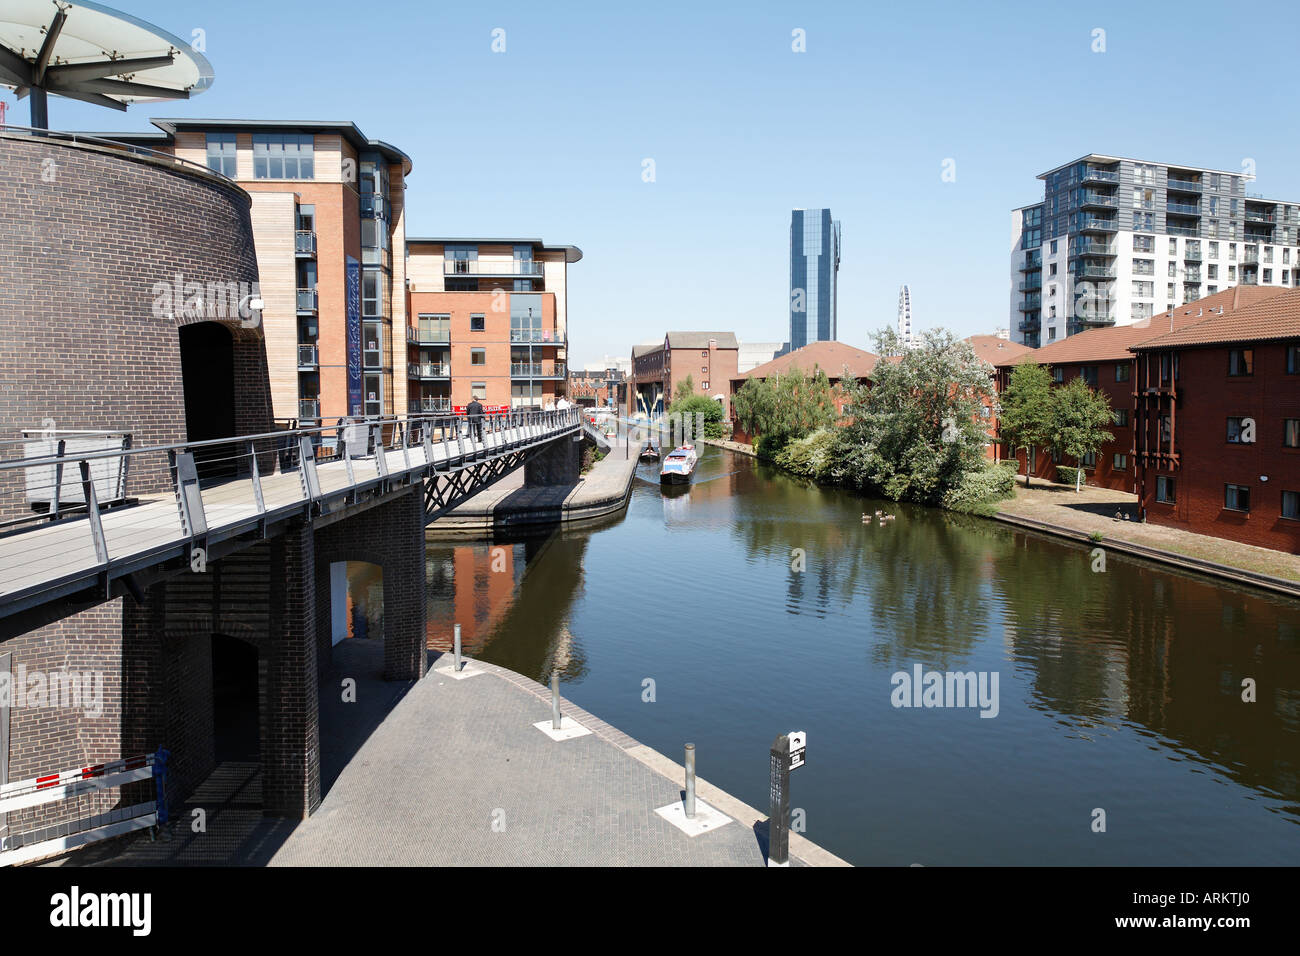 Birmingham city centre canals West Midlands central England UK july